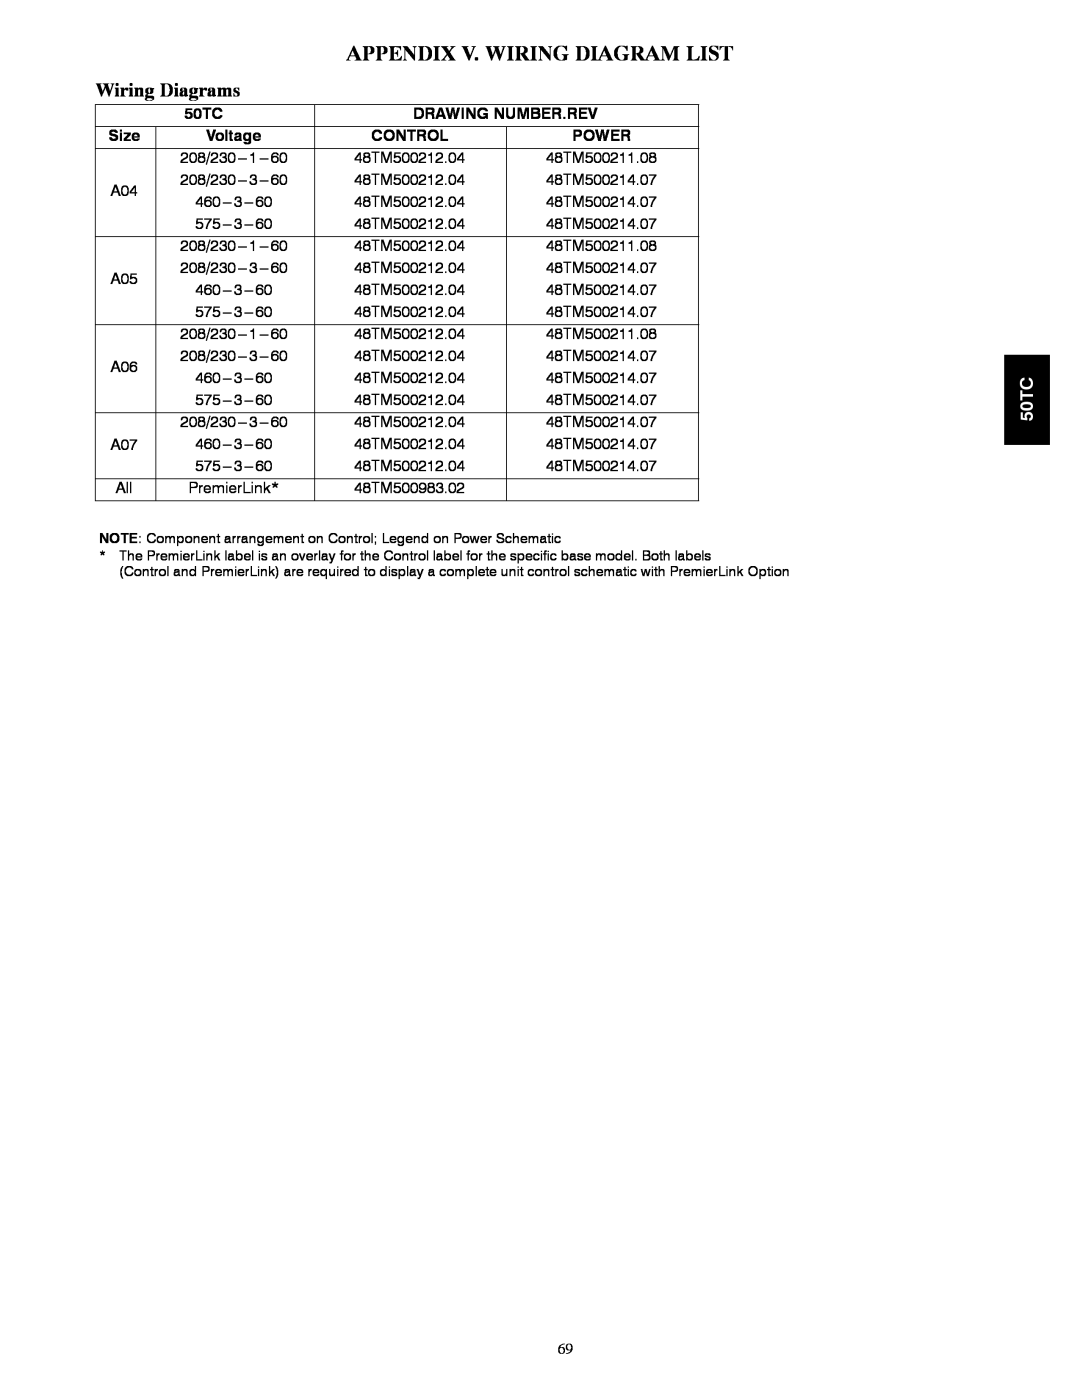 Carrier 50TCA04-A07 appendix Appendix V. Wiring Diagram List, Wiring Diagrams, PremierLink 